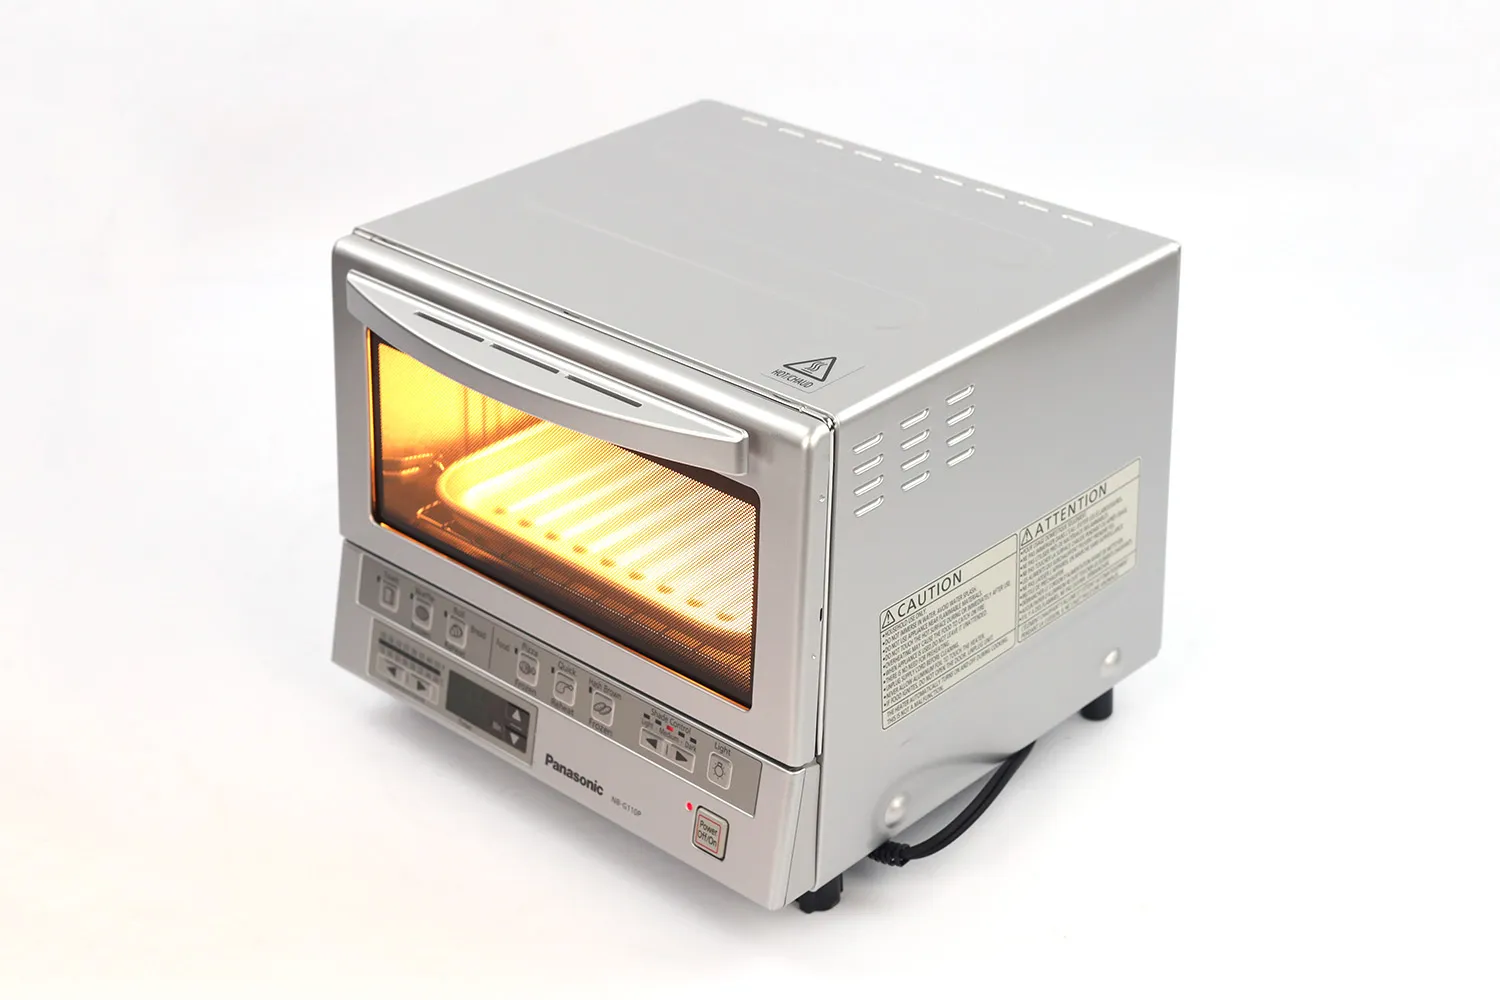 Vintage Panasonic Flash Xpress Toaster Oven NB-G100P